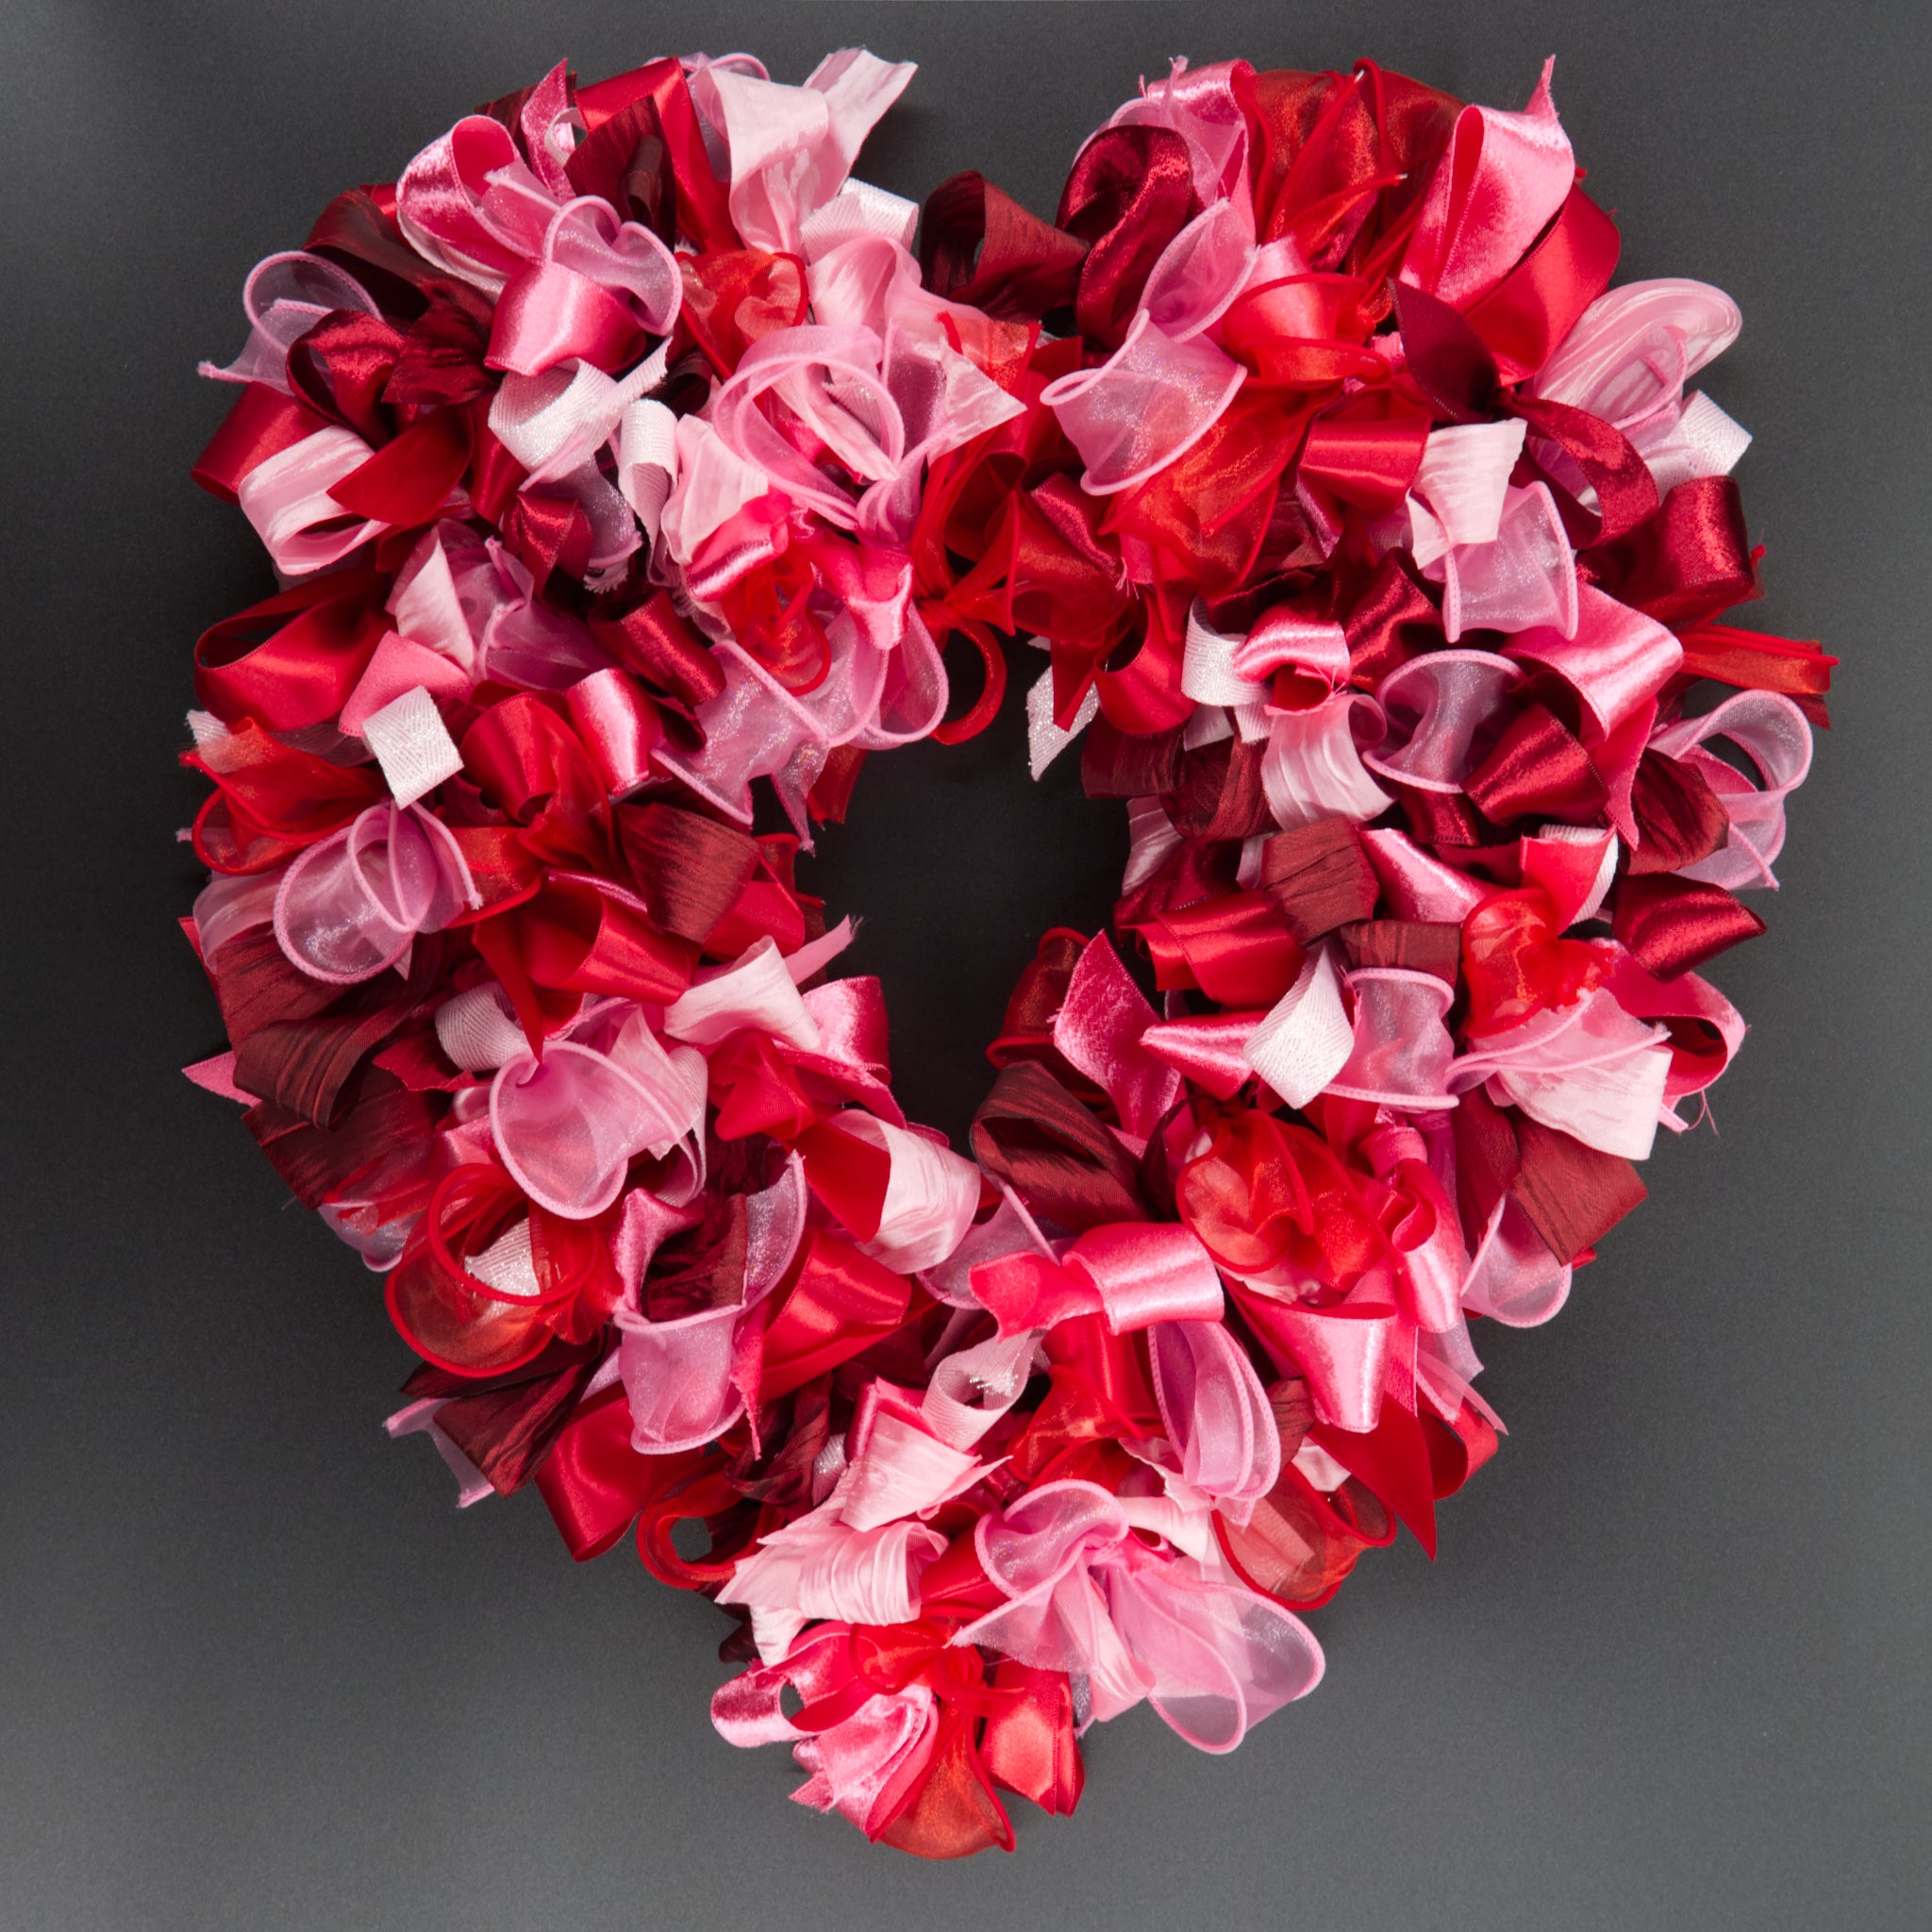 How to Make a Heart Ribbon Wreath